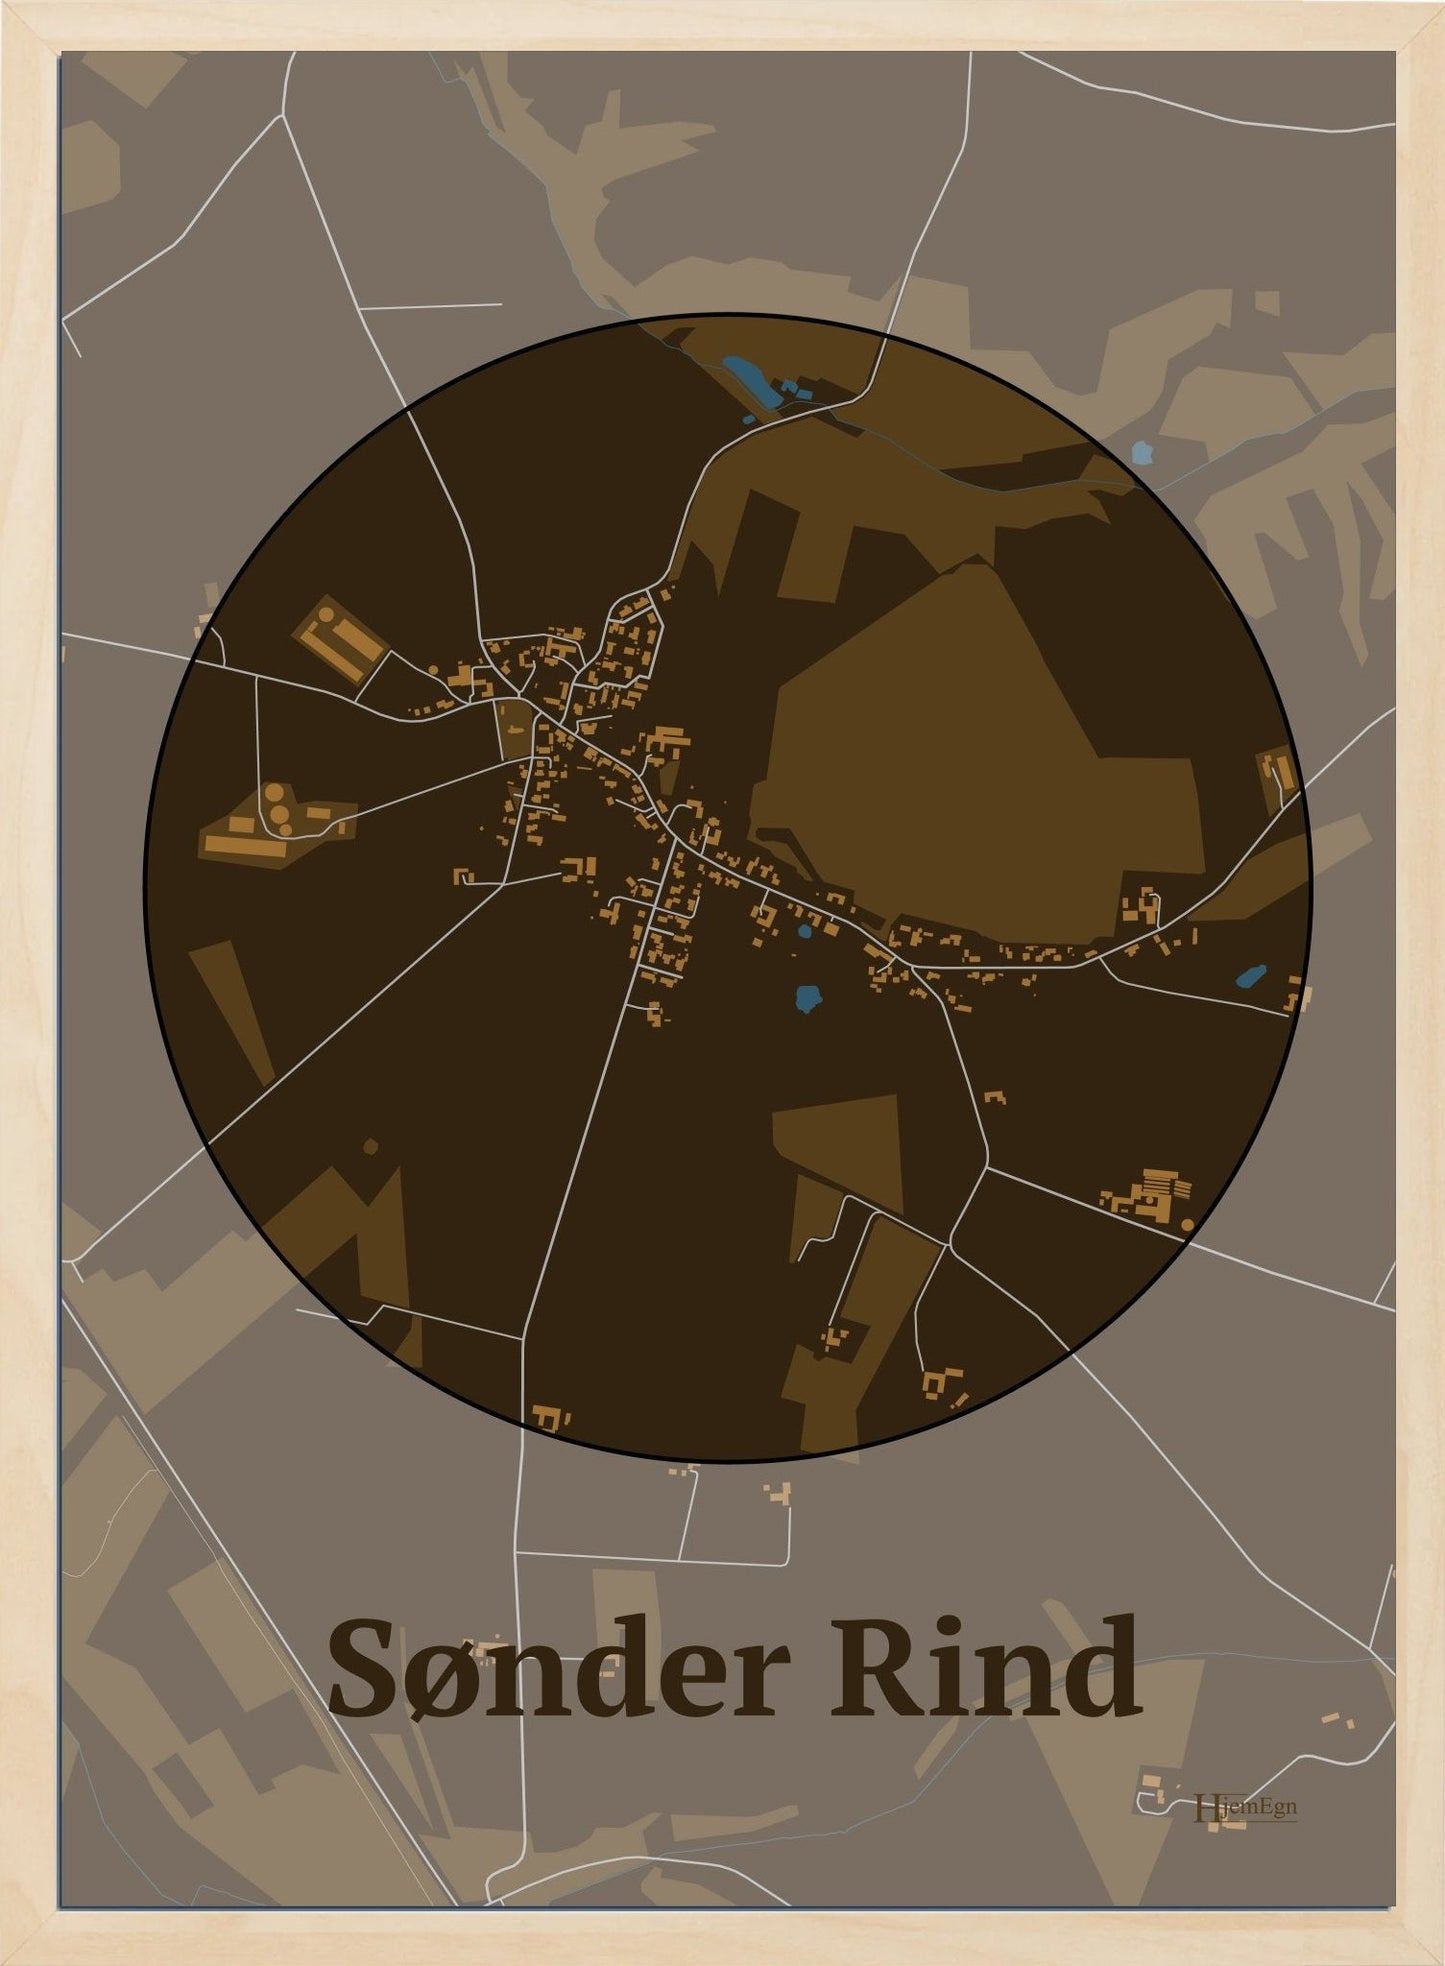 Sønder Rind plakat i farve mørk brun og HjemEgn.dk design centrum. Design bykort for Sønder Rind